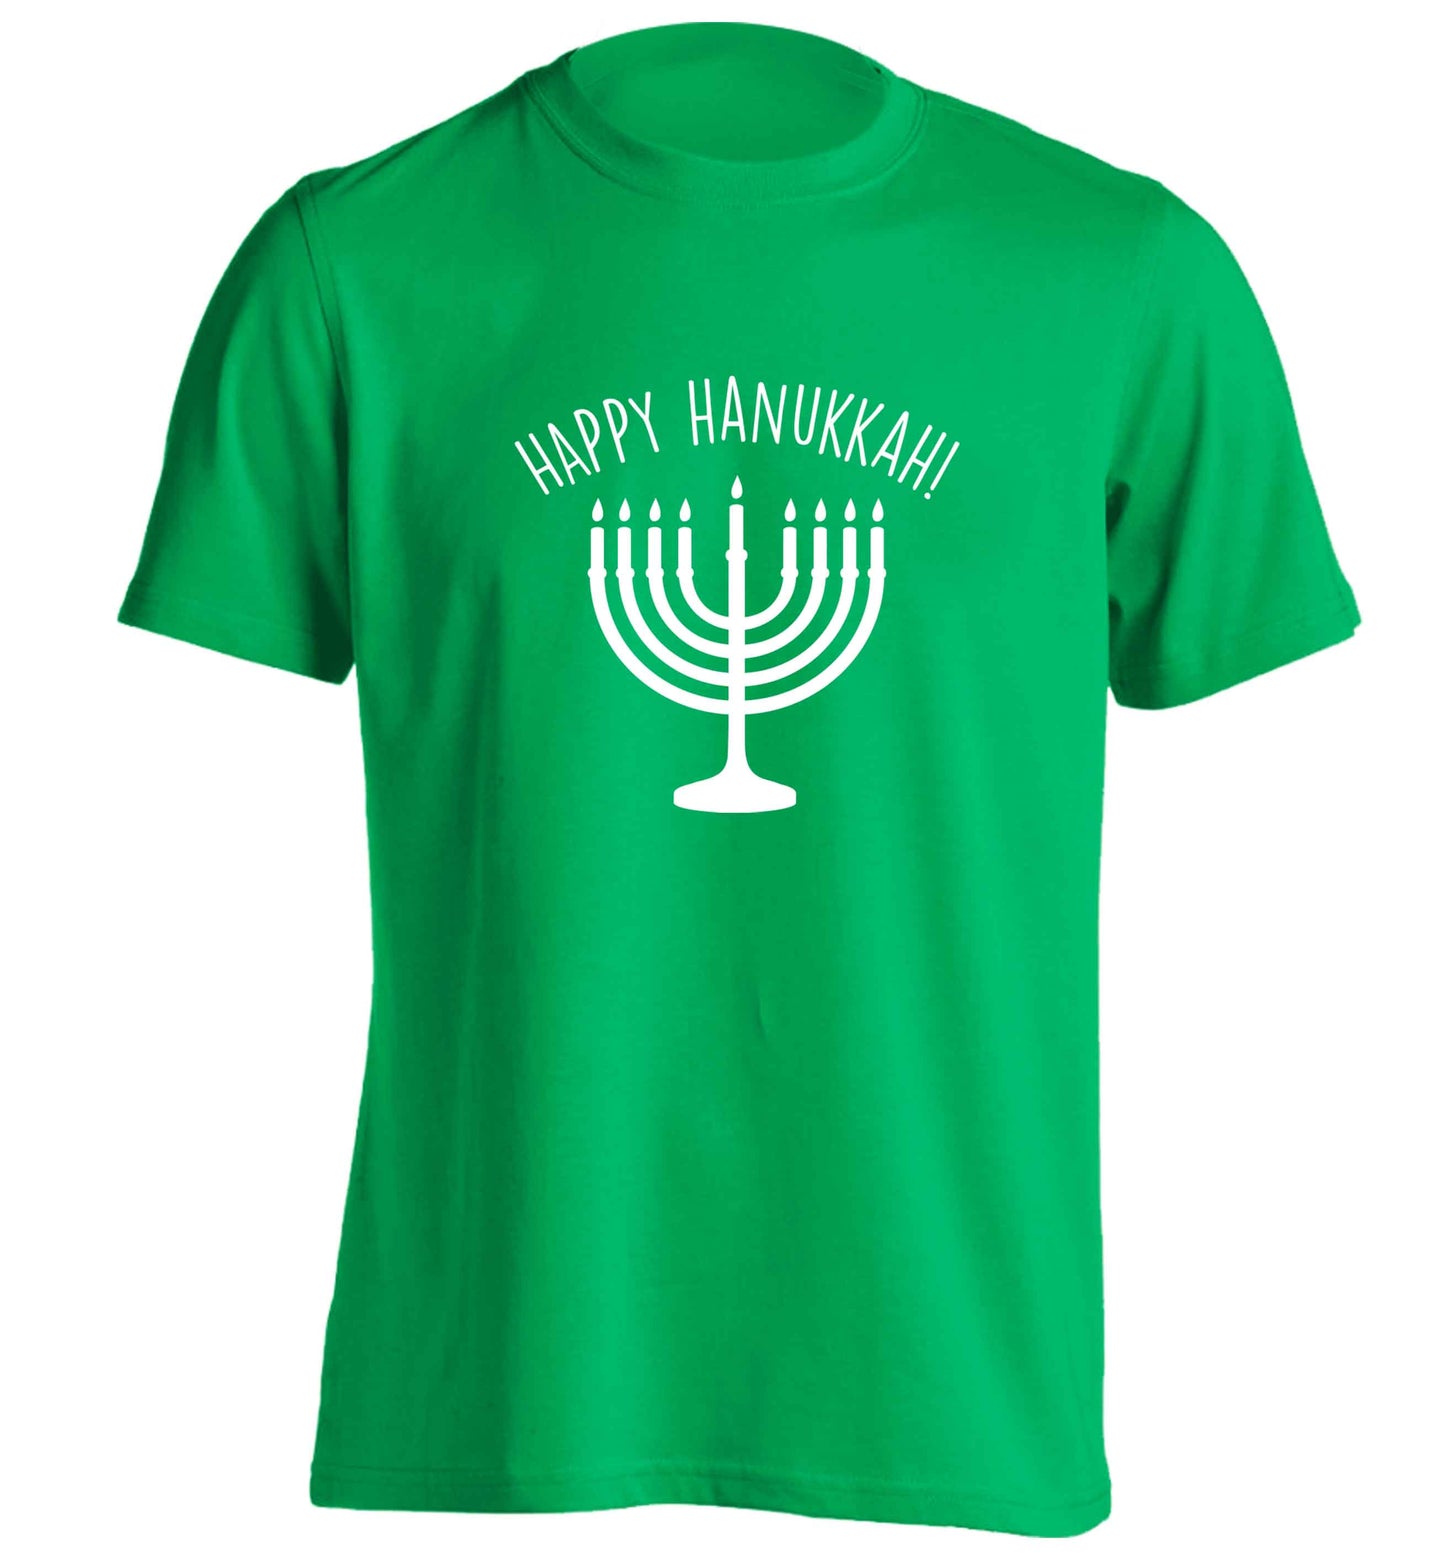 Happy hanukkah adults unisex green Tshirt 2XL